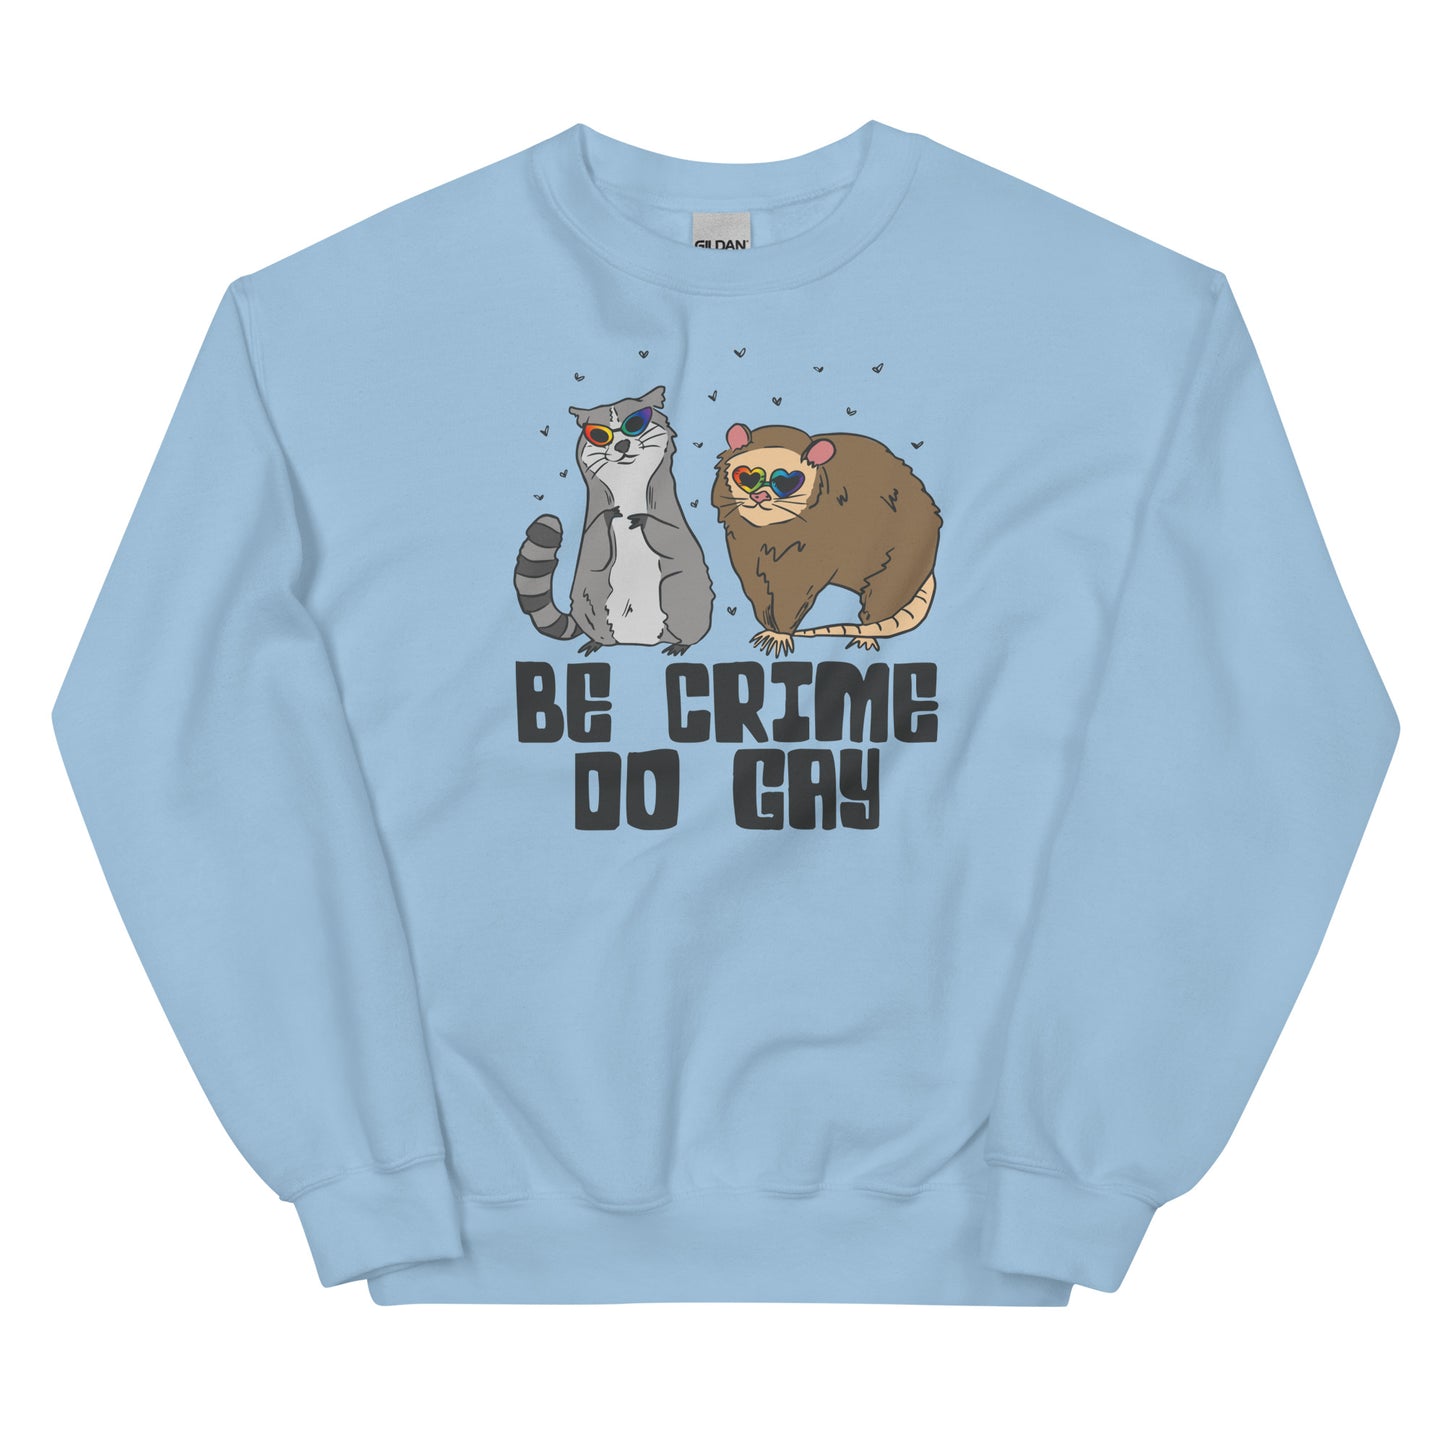 Be Crime Do Gay (Raccoon and Possum) Unisex Sweatshirt